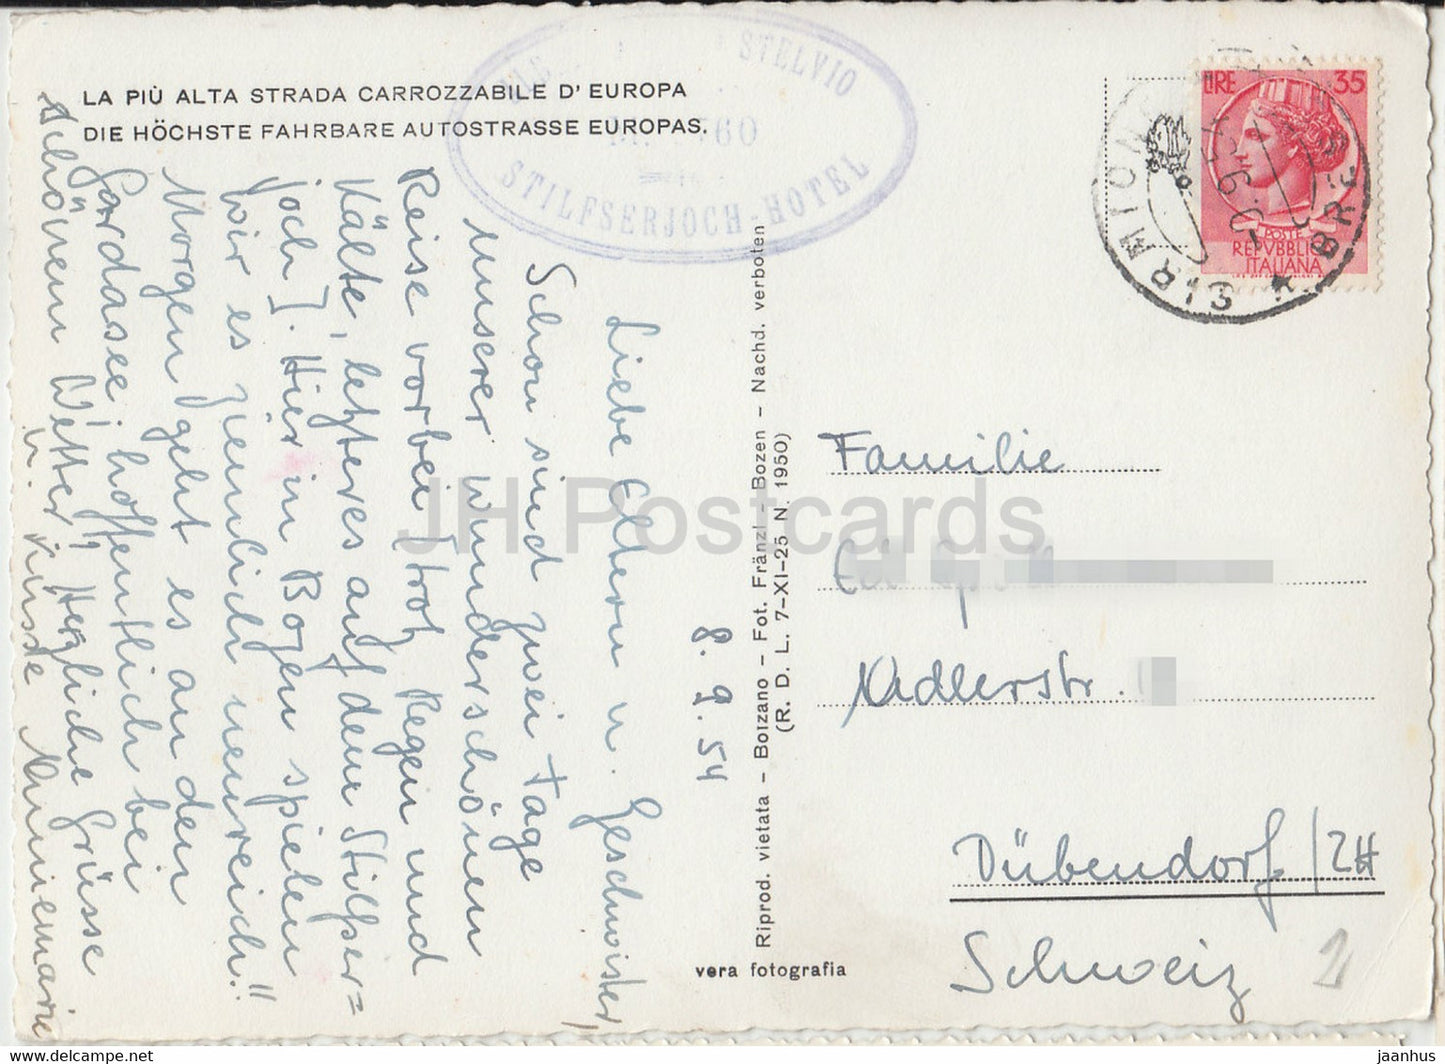 Strada dello Stelvio 2760 m - Stilfserjoch Strasse und Umgebung - old postcard - 1954 - Italy - Italia - used